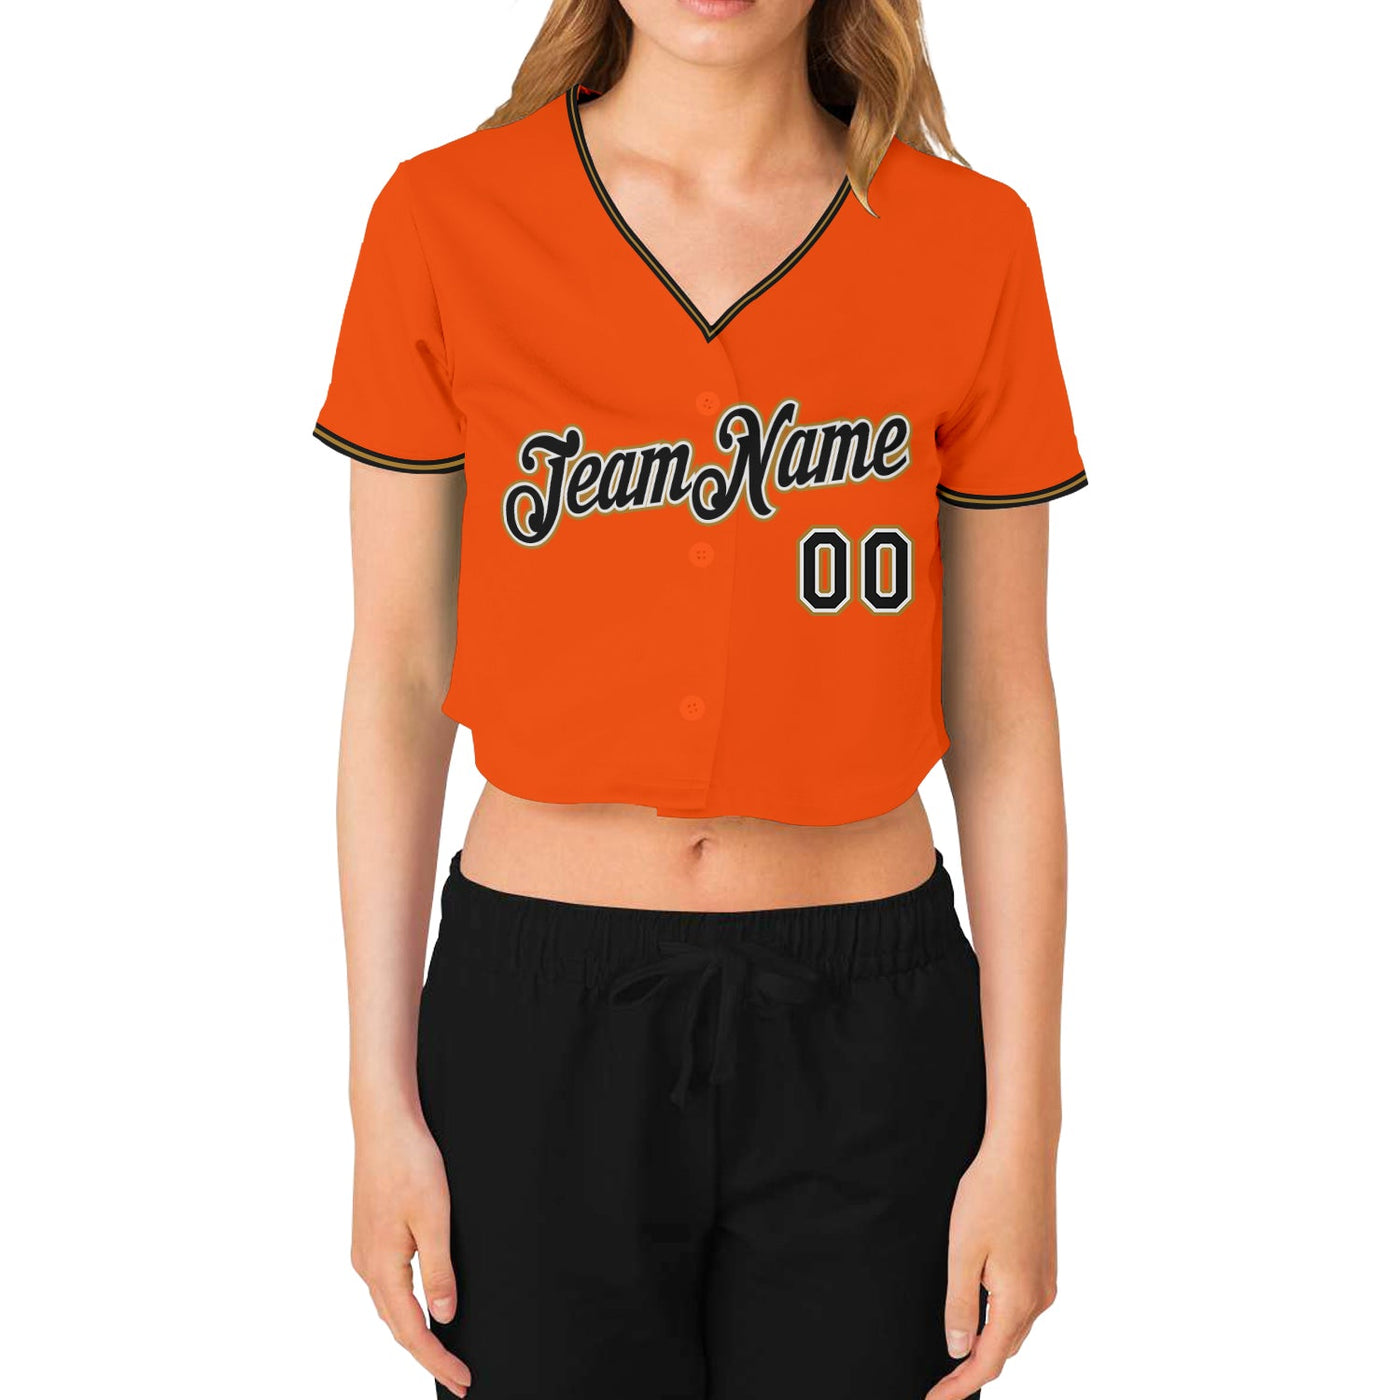 Custom Women's Orange Black Old Gold-White V-Neck Cropped Baseball Jersey - Owls Matrix LTD